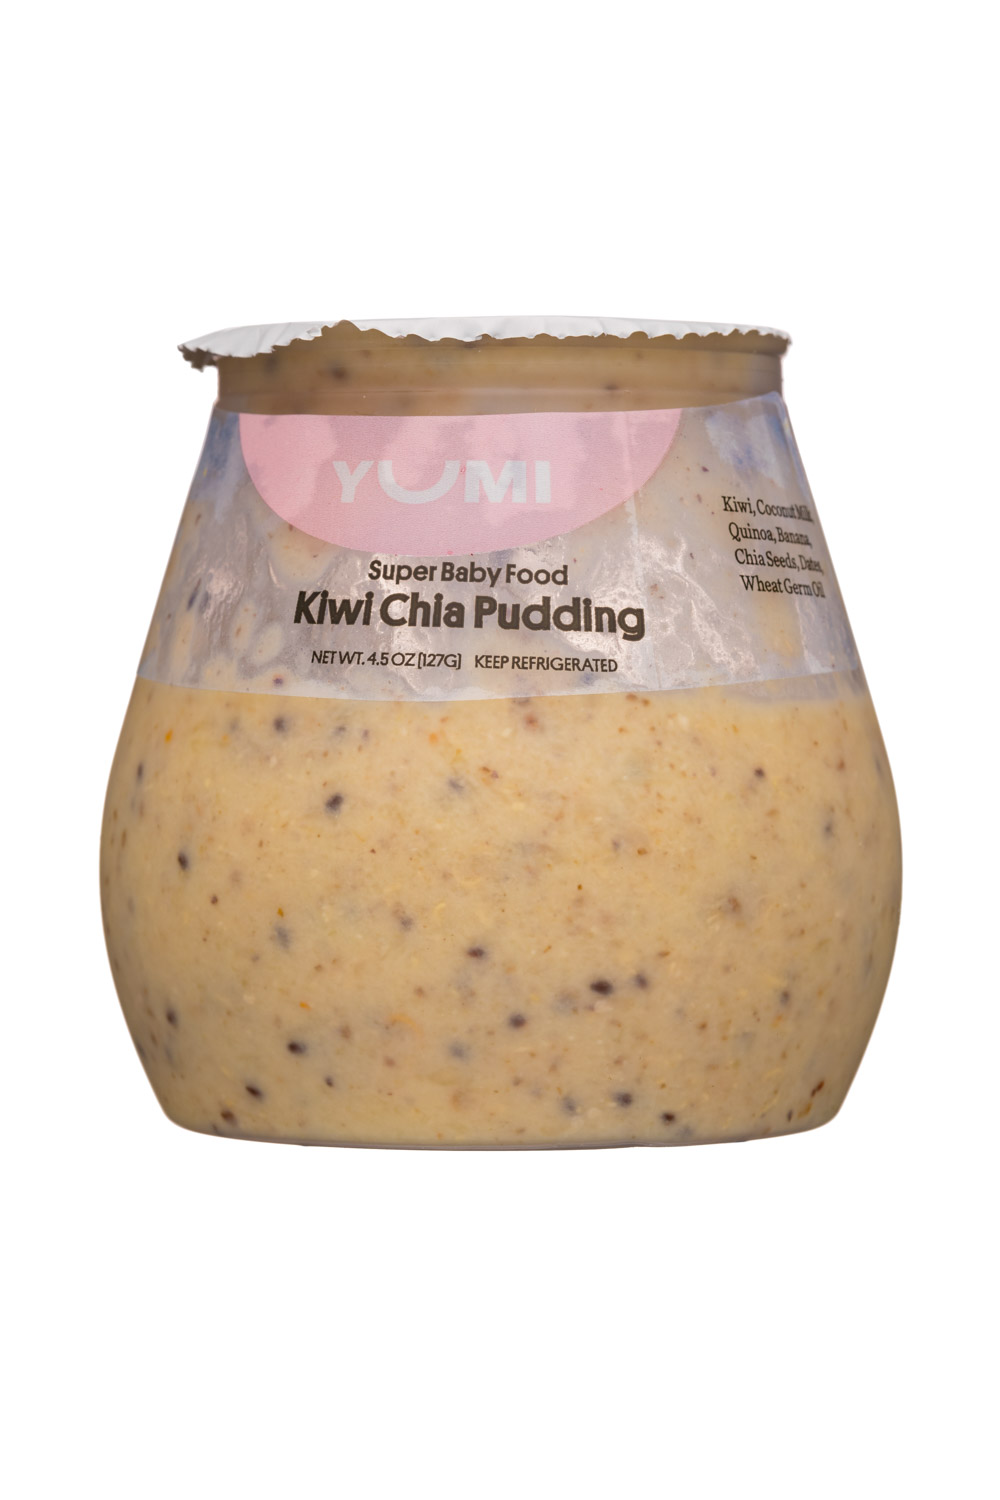 Kiwi Chia Pudding